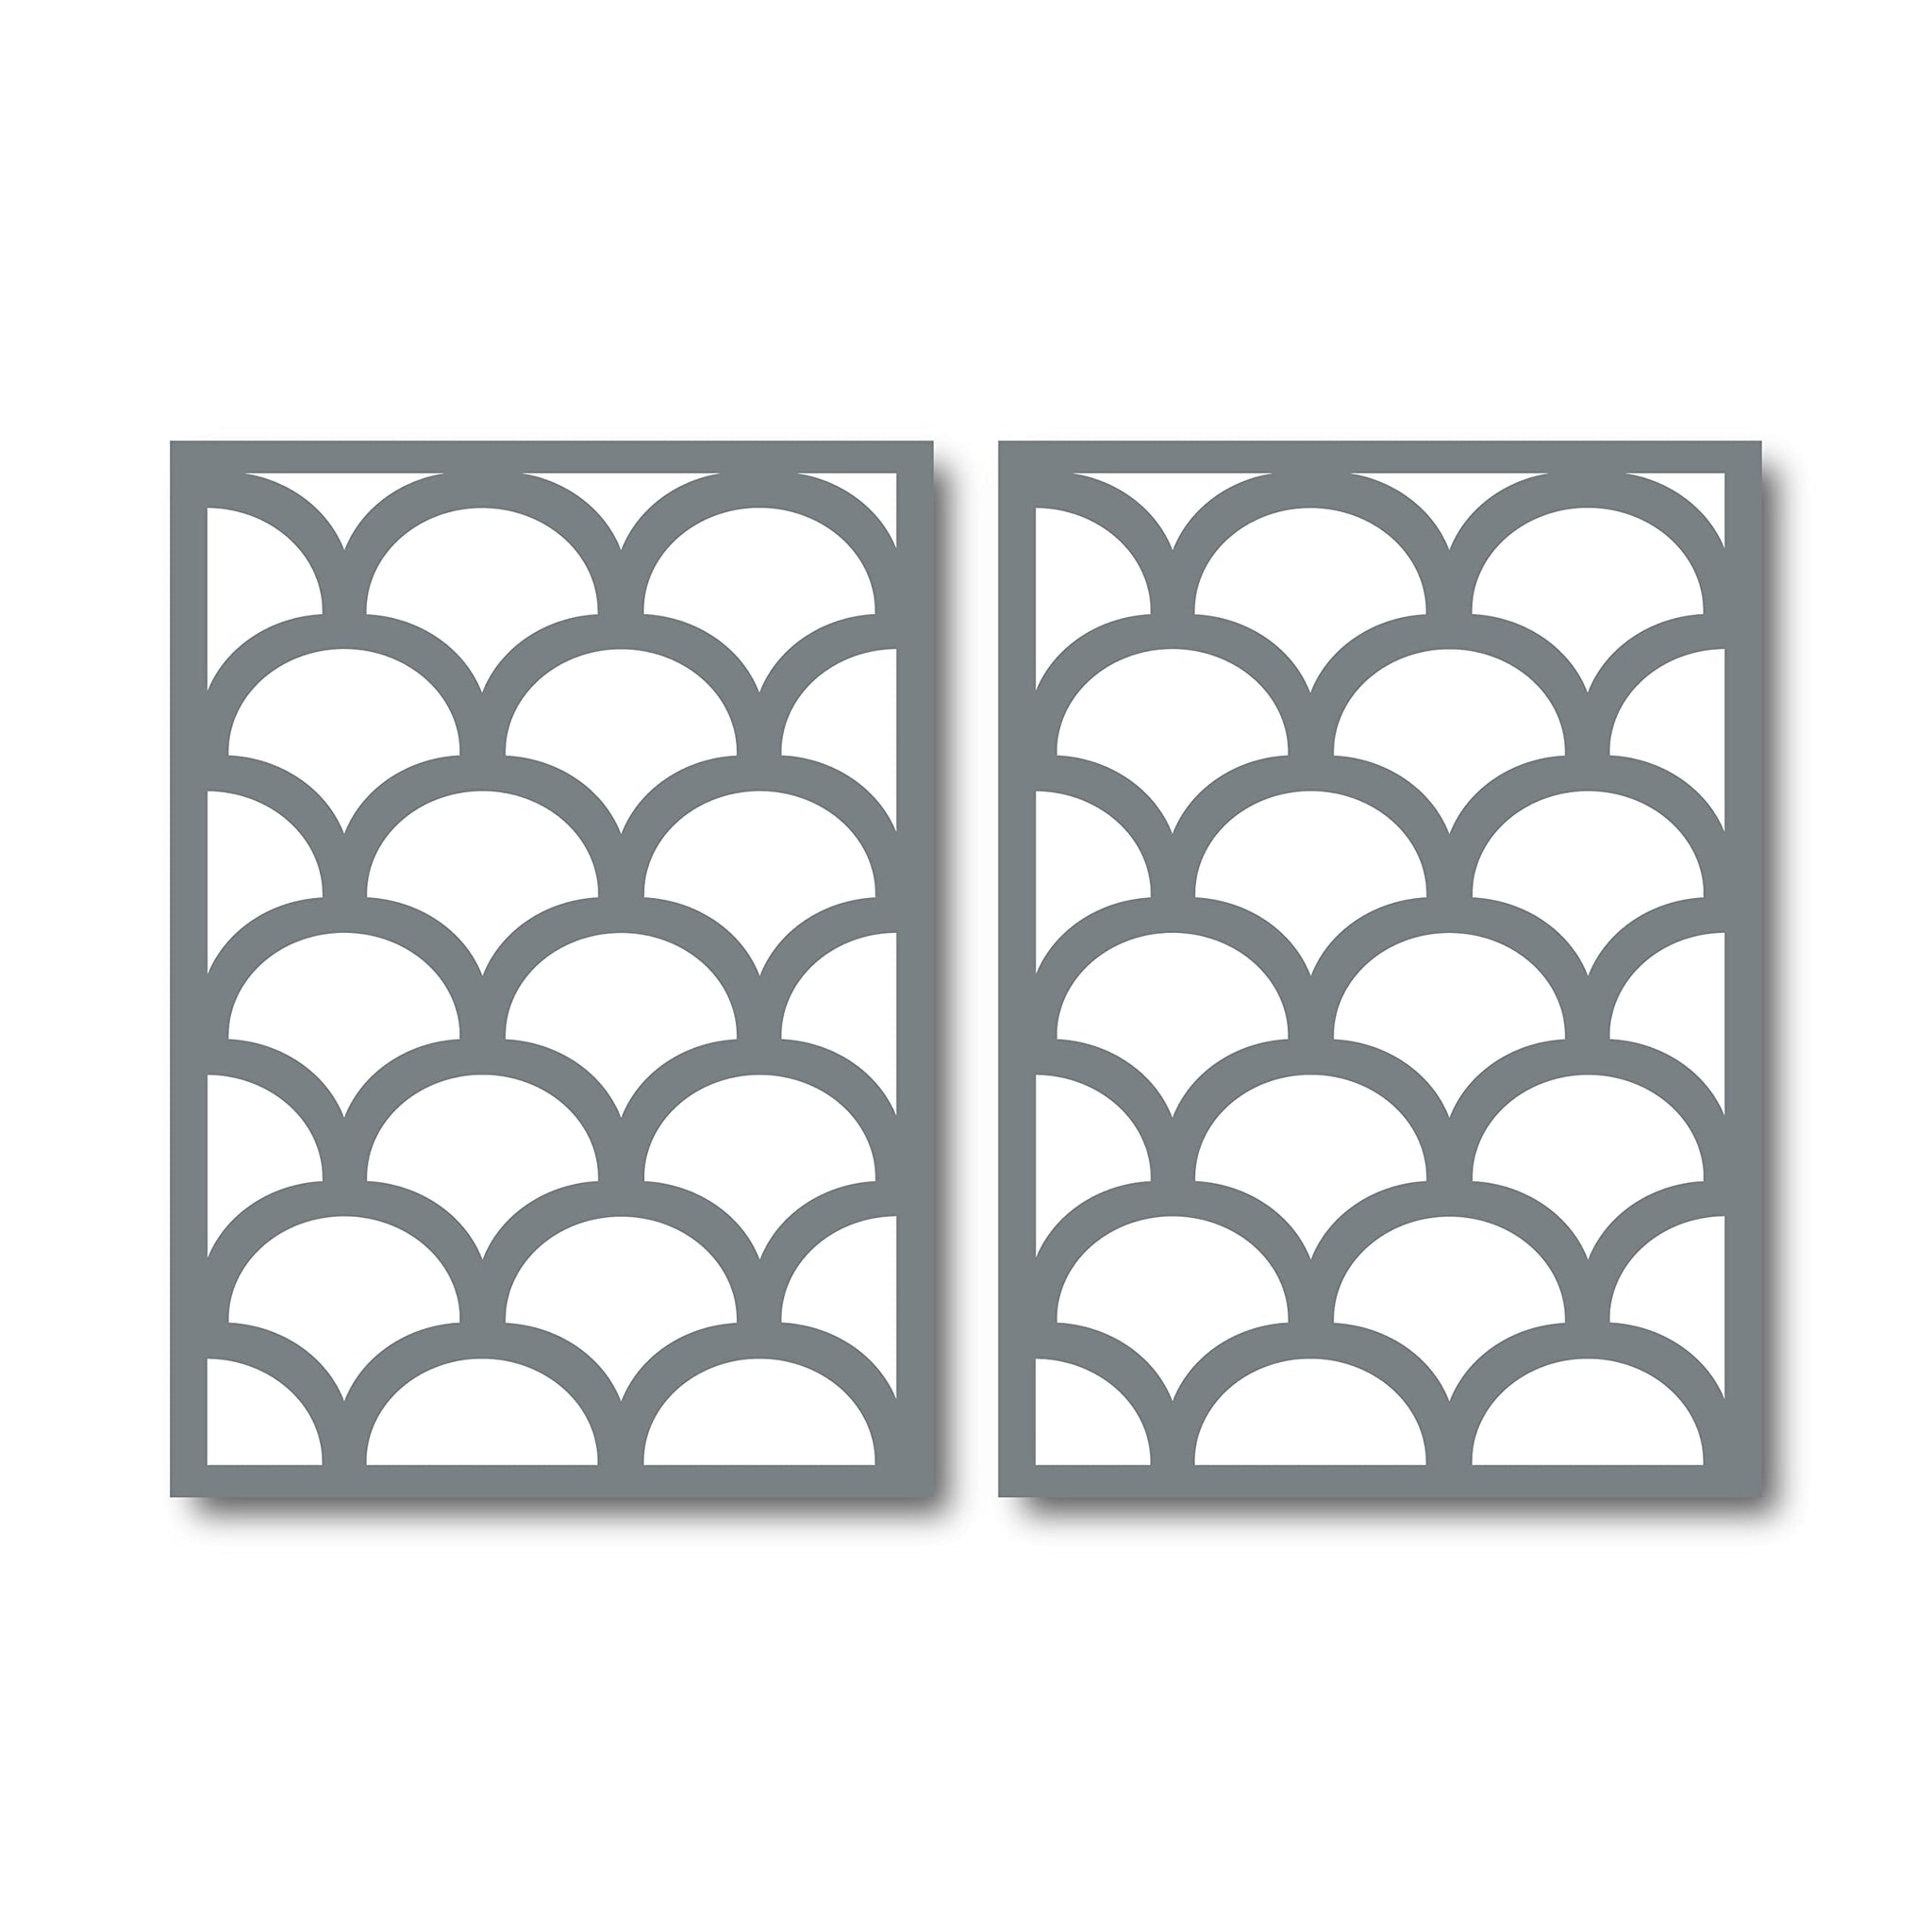 Brick Herringbone Stencil Set - Includes 2 Identical Herringbone Brick Stencils for Painting Walls, Floors & Other DIY Projects - Herringbone Pattern